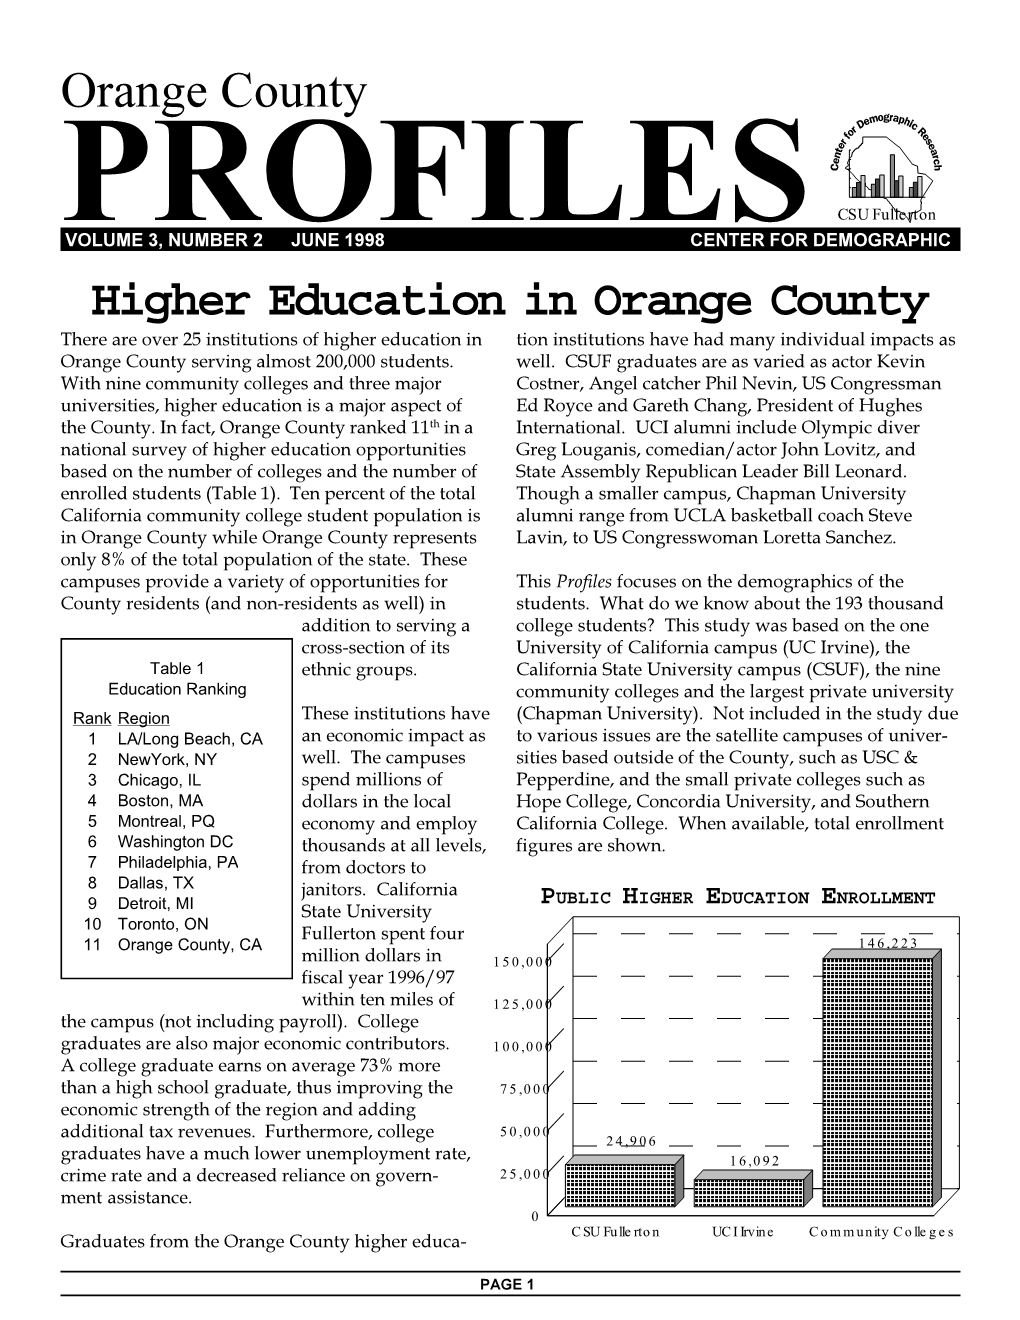 Higher Education in Orange County